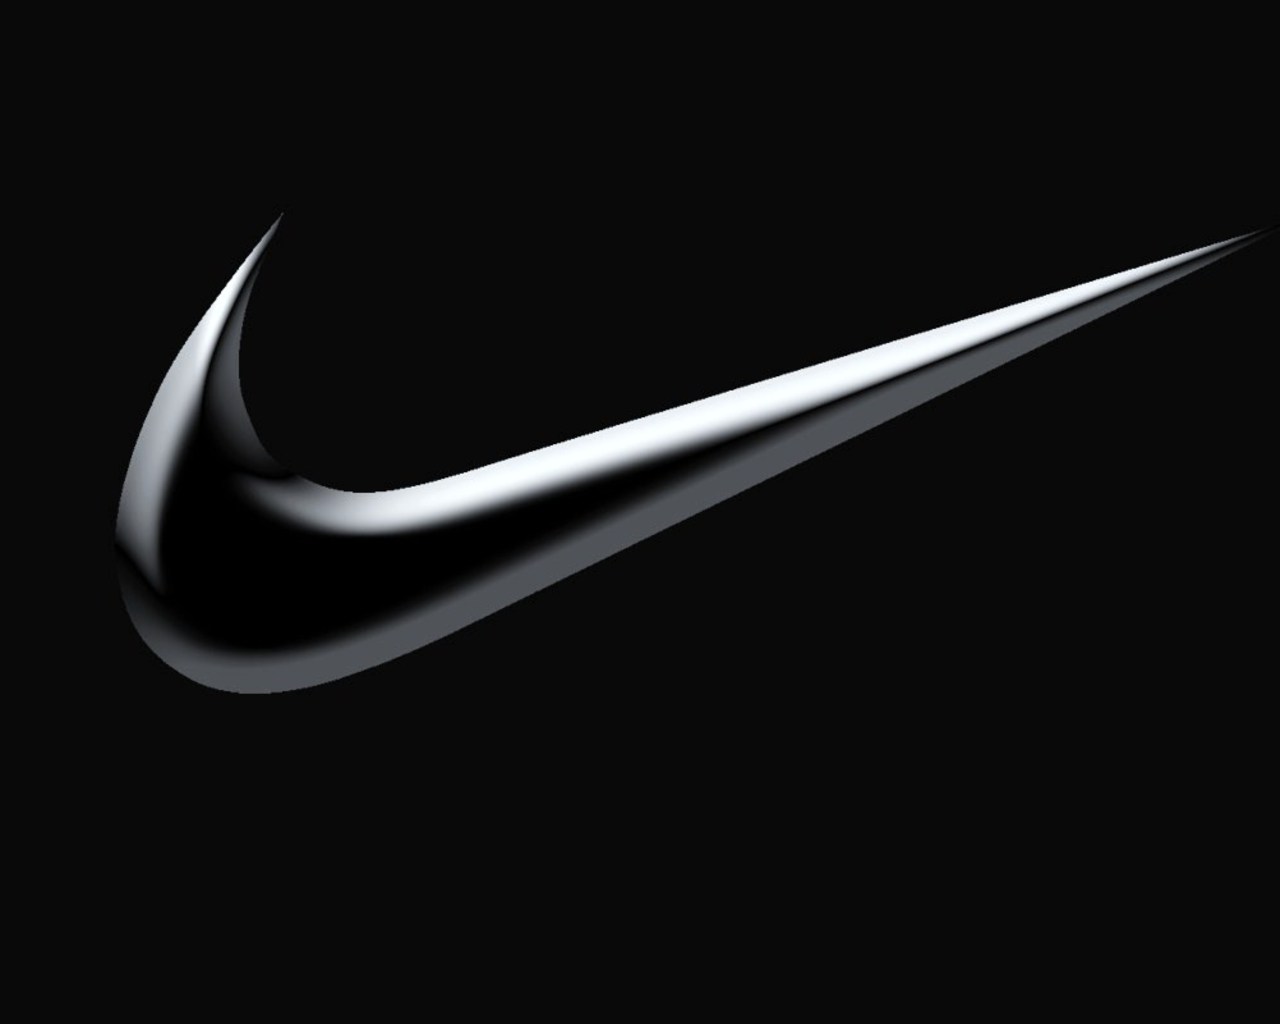 Nike Logo Wallpaper HD In Logos Imageci